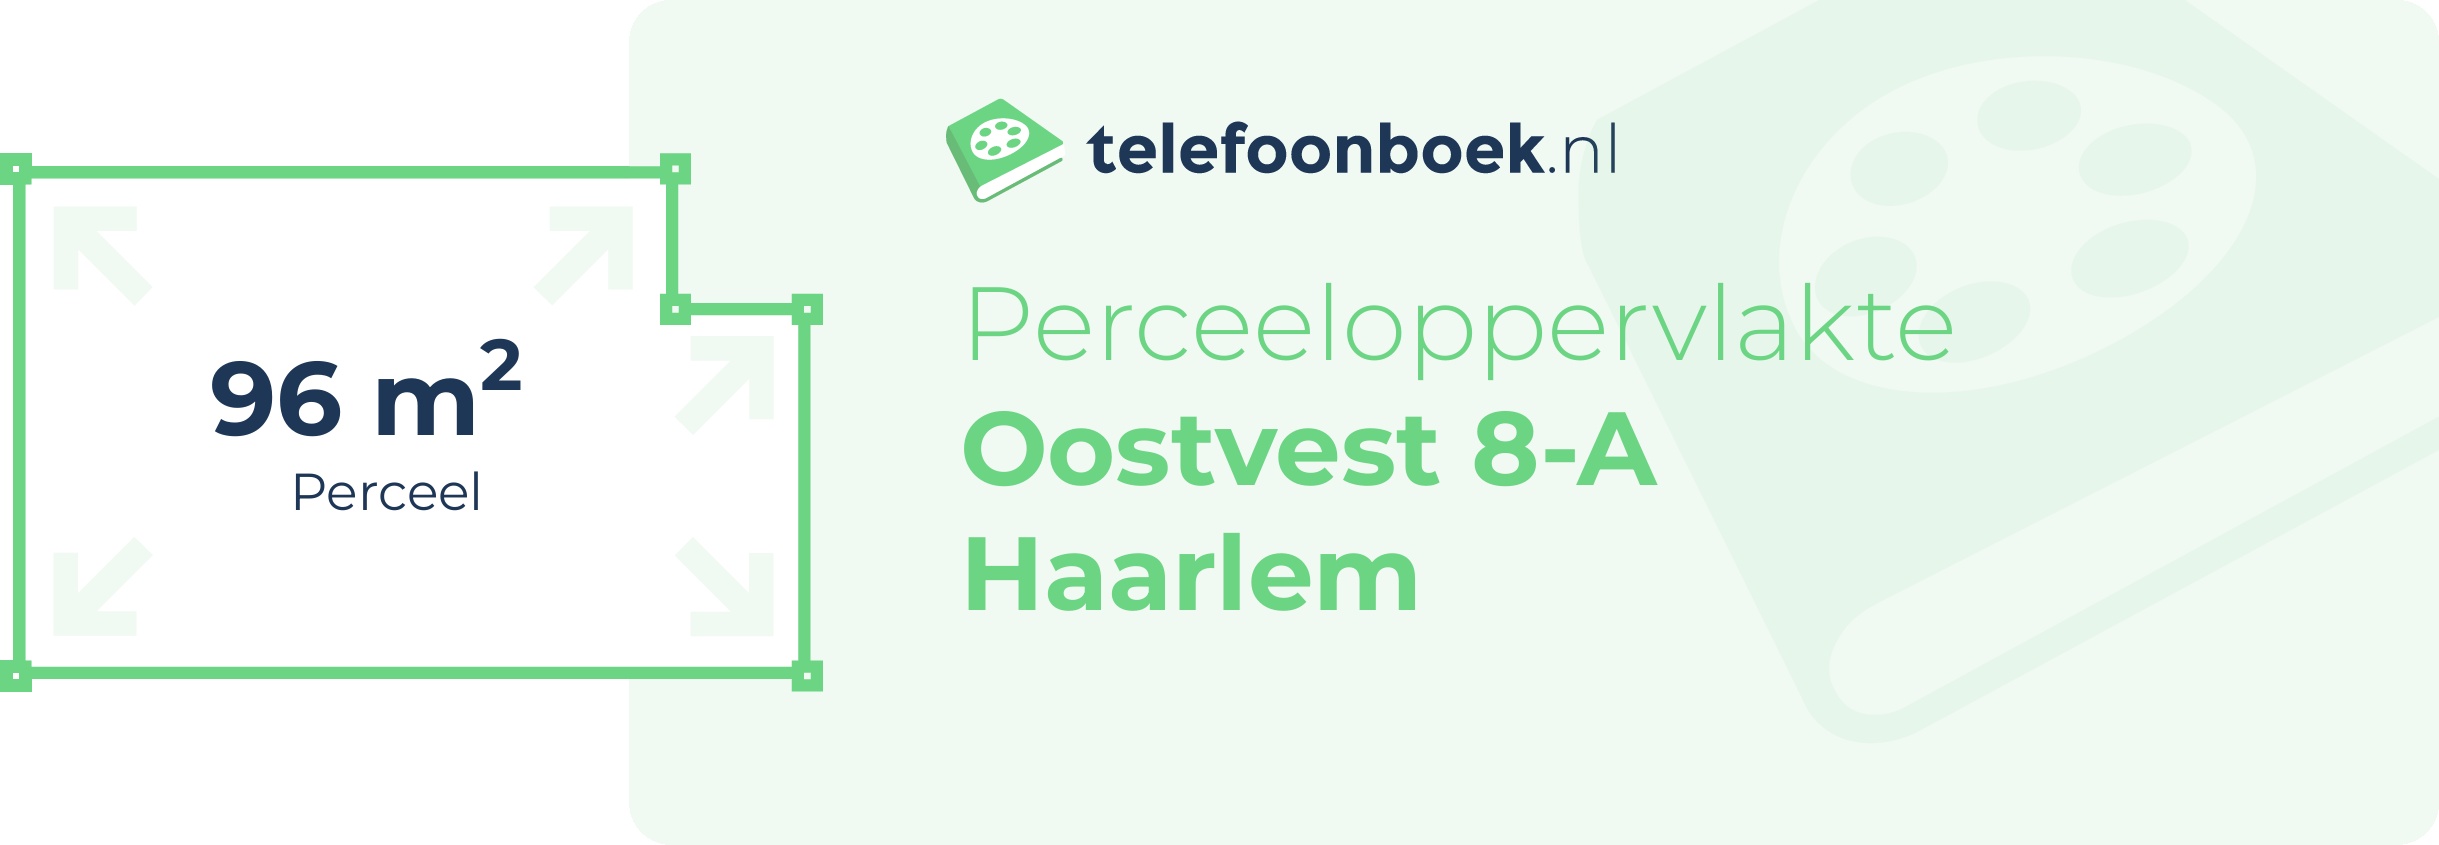 Perceeloppervlakte Oostvest 8-A Haarlem